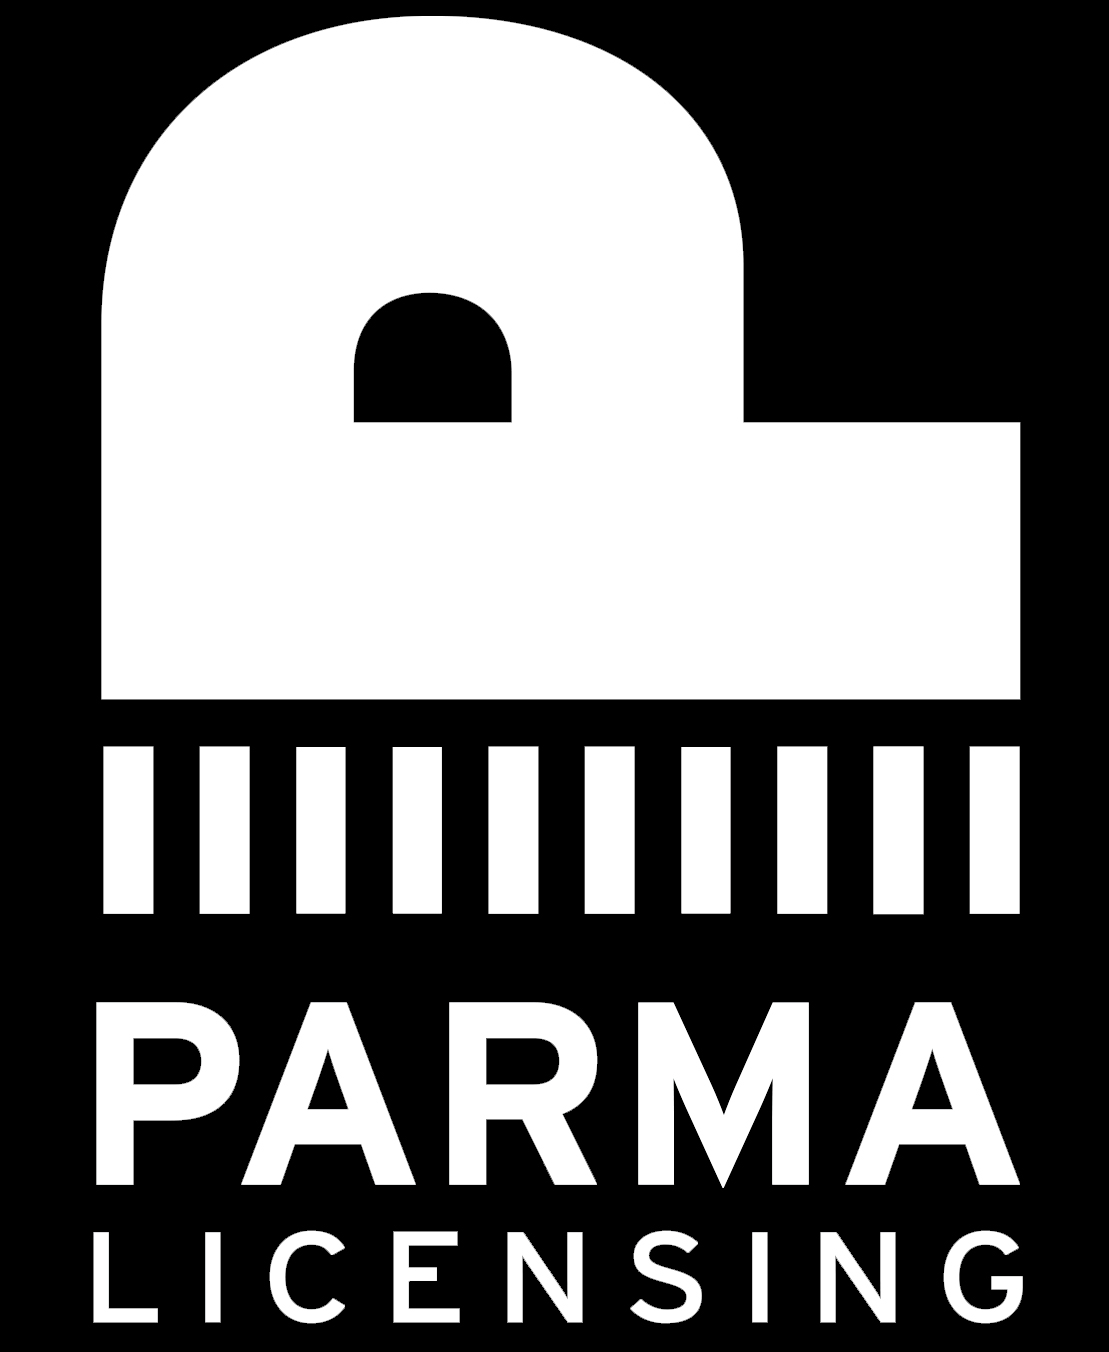 Parma Licensing